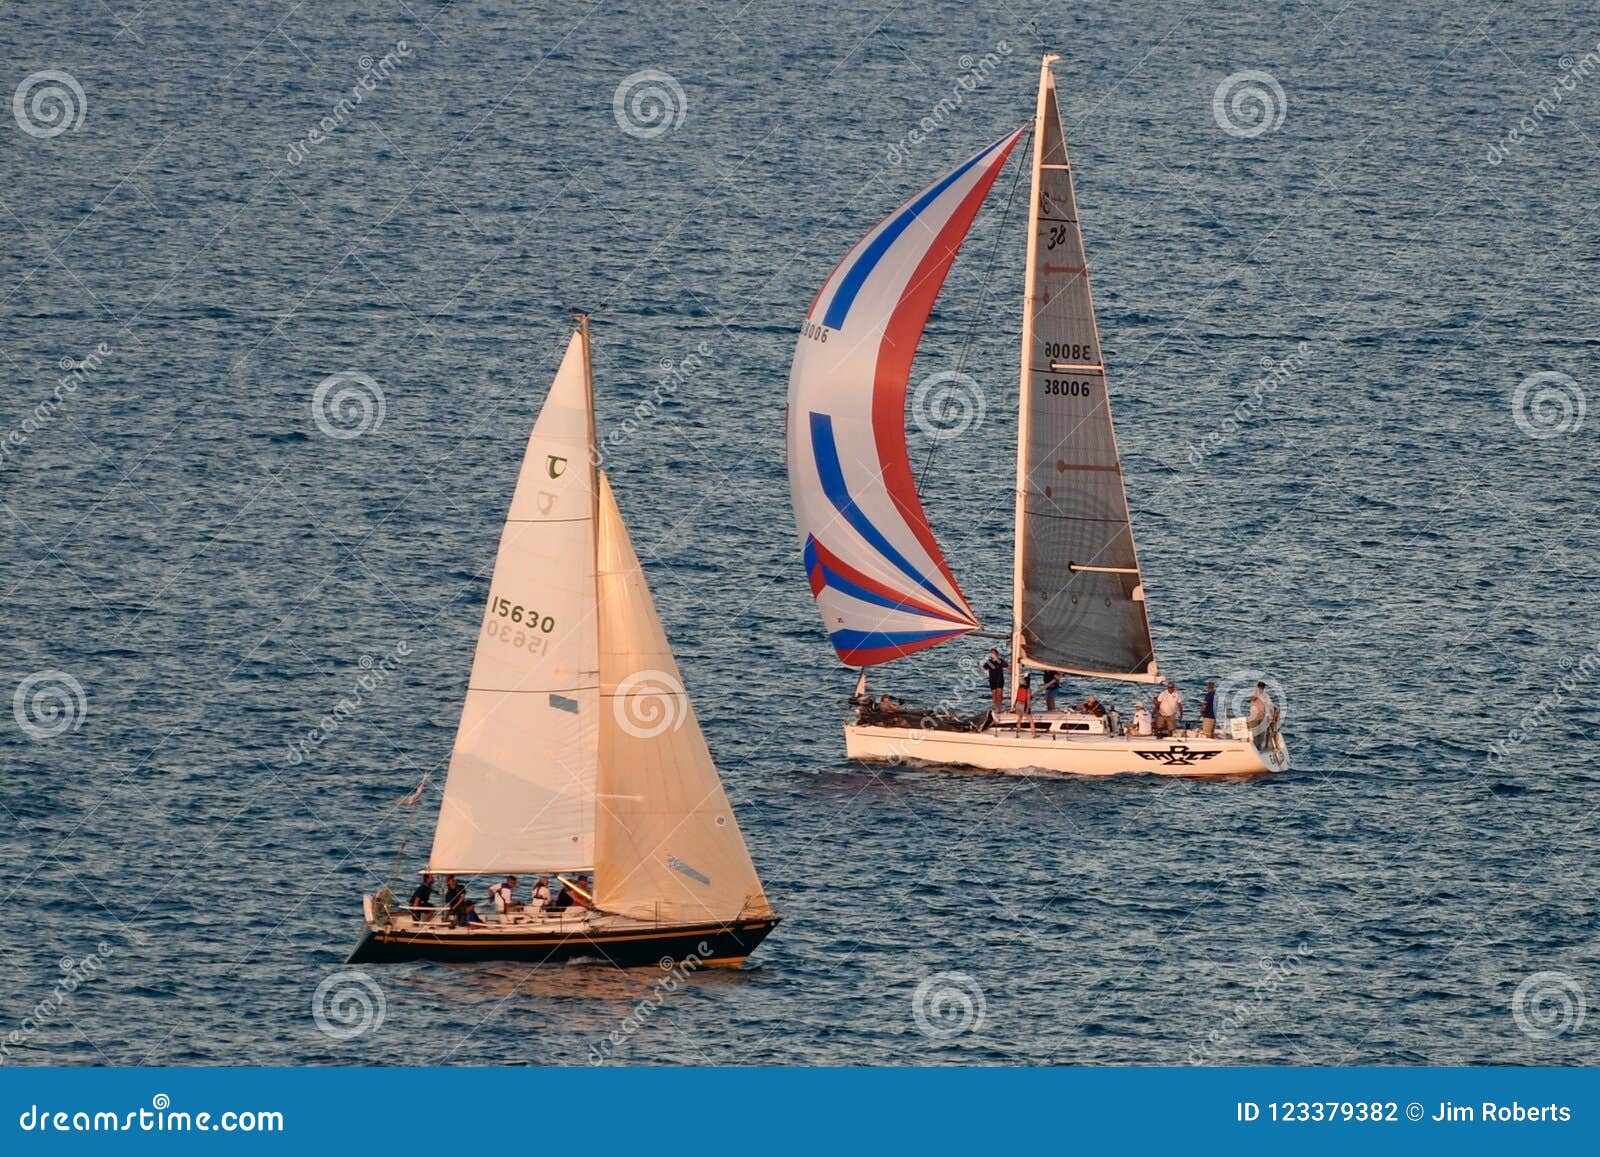 sailboat races on lake michigan